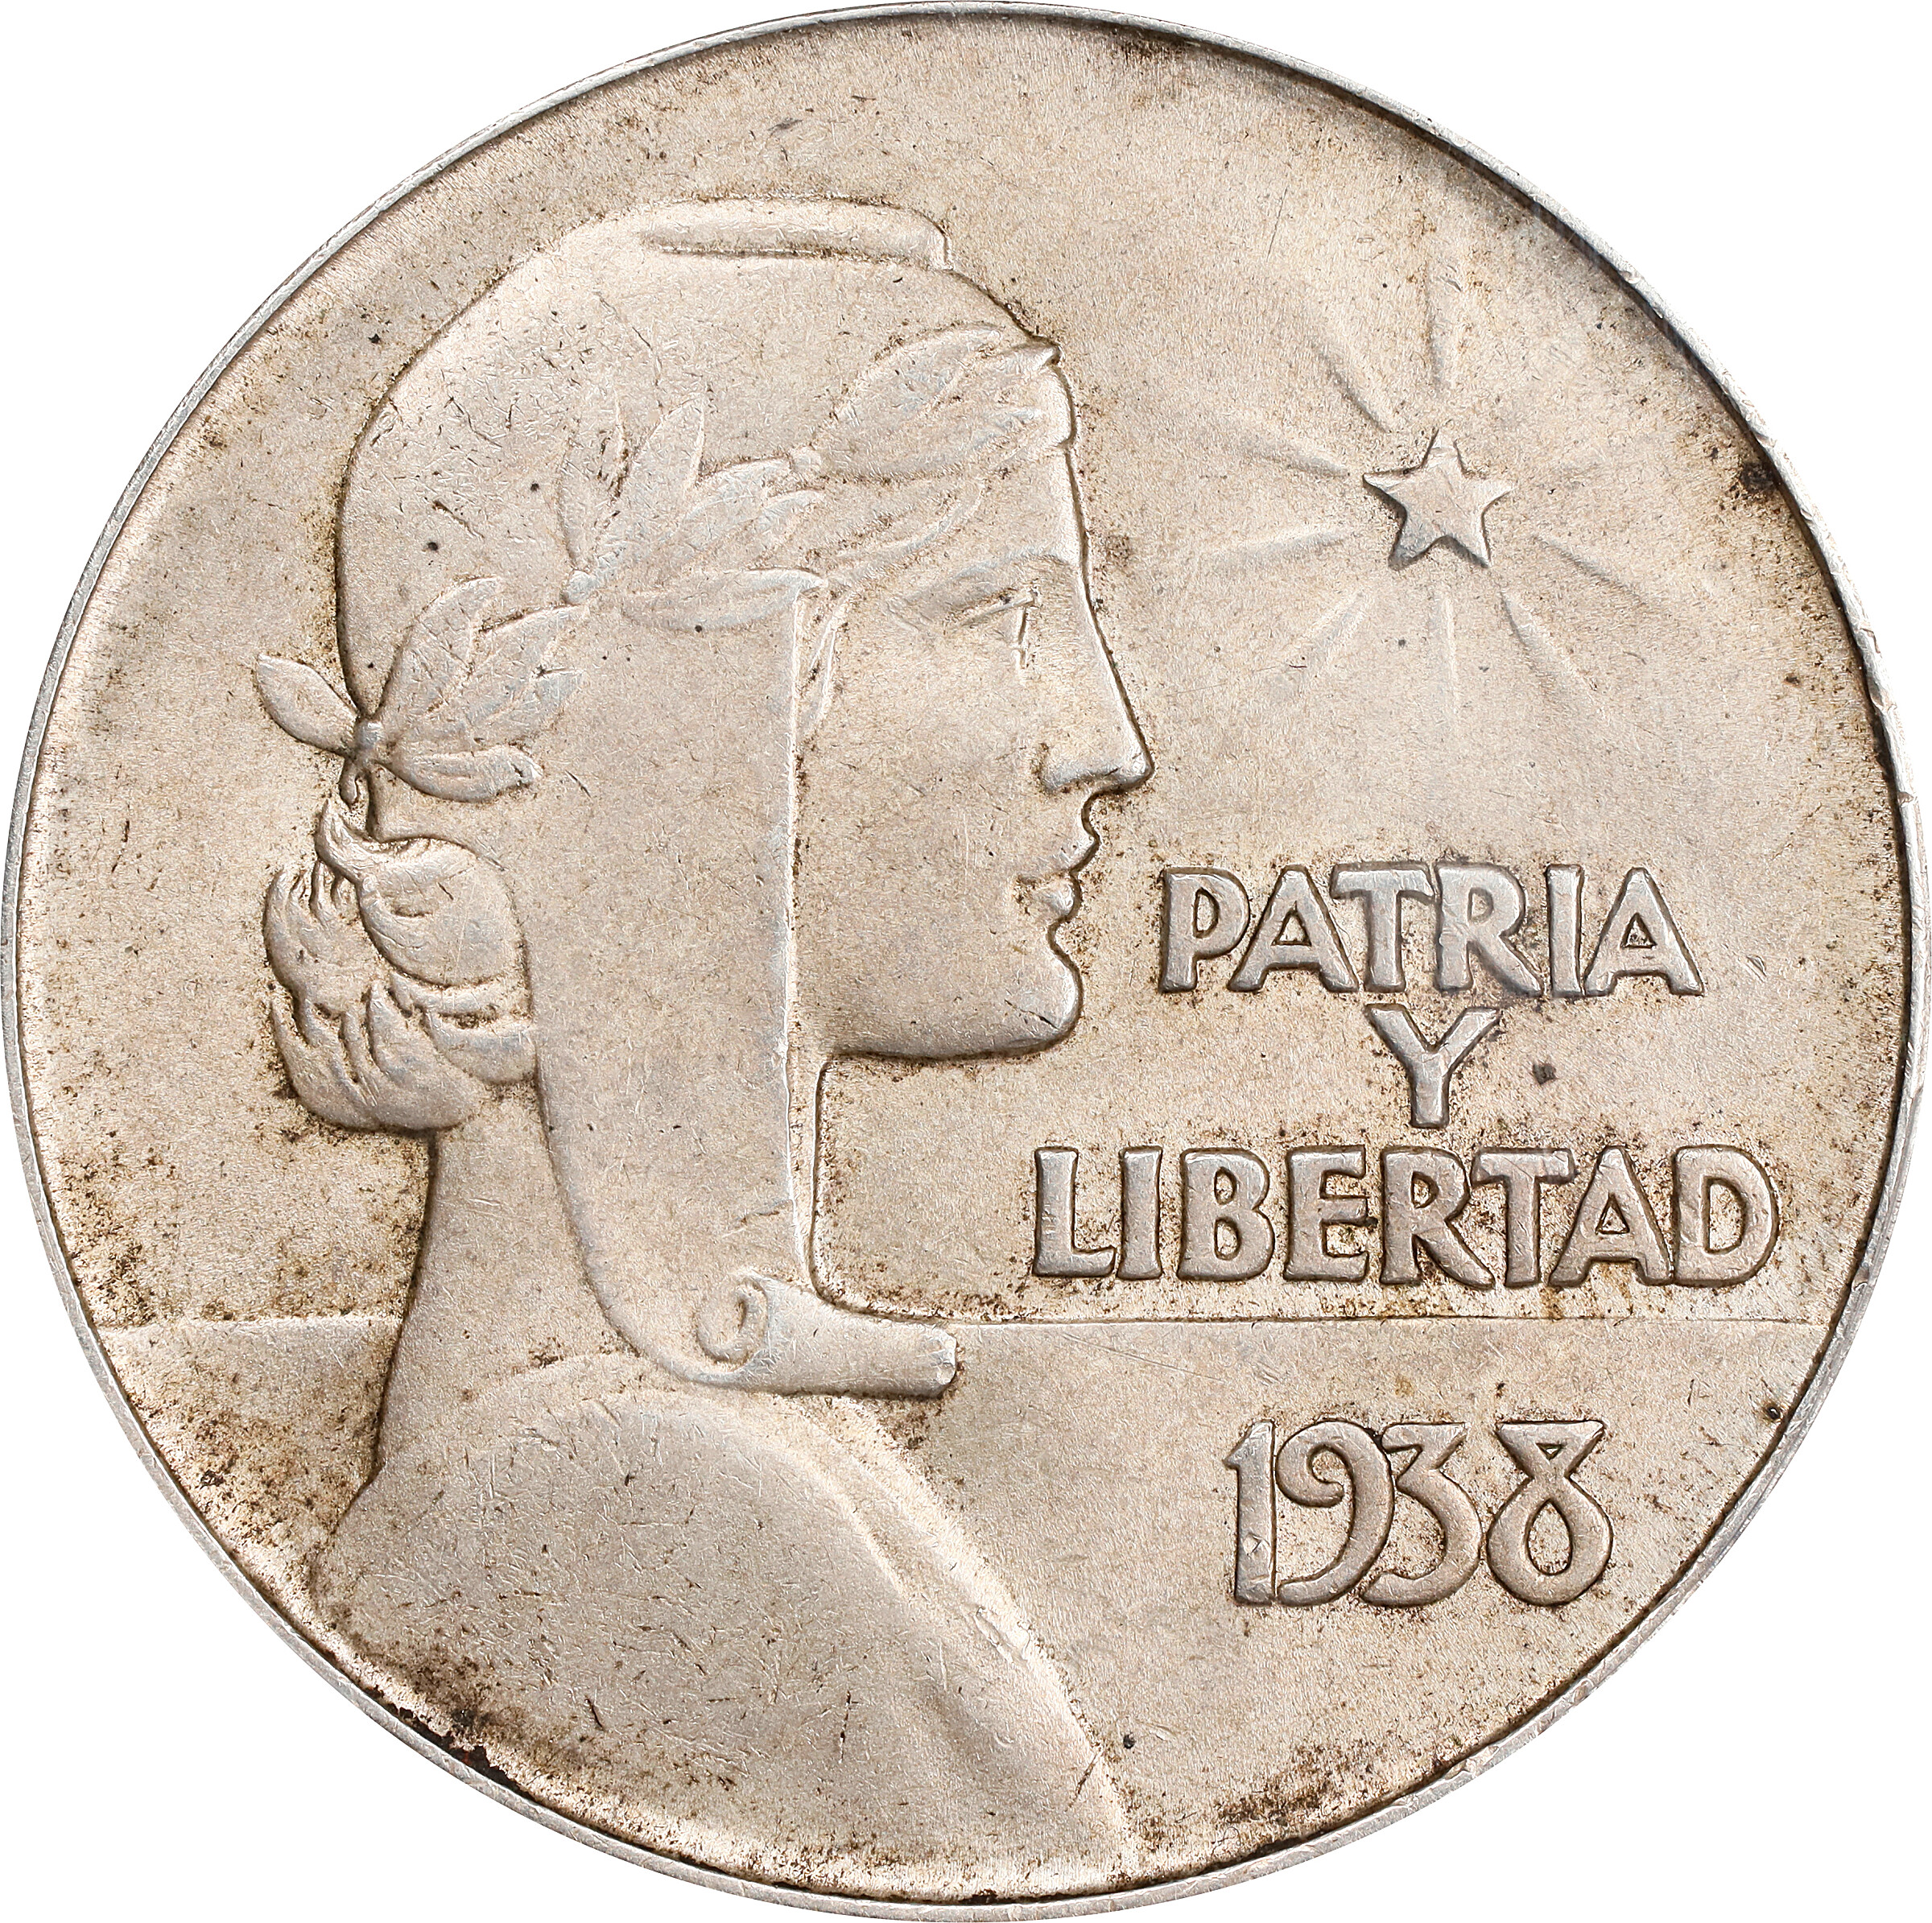 Vintage Cuba Coins > Cuba Coins Album spaces for all 60 Republic Coins  collectible for Sale